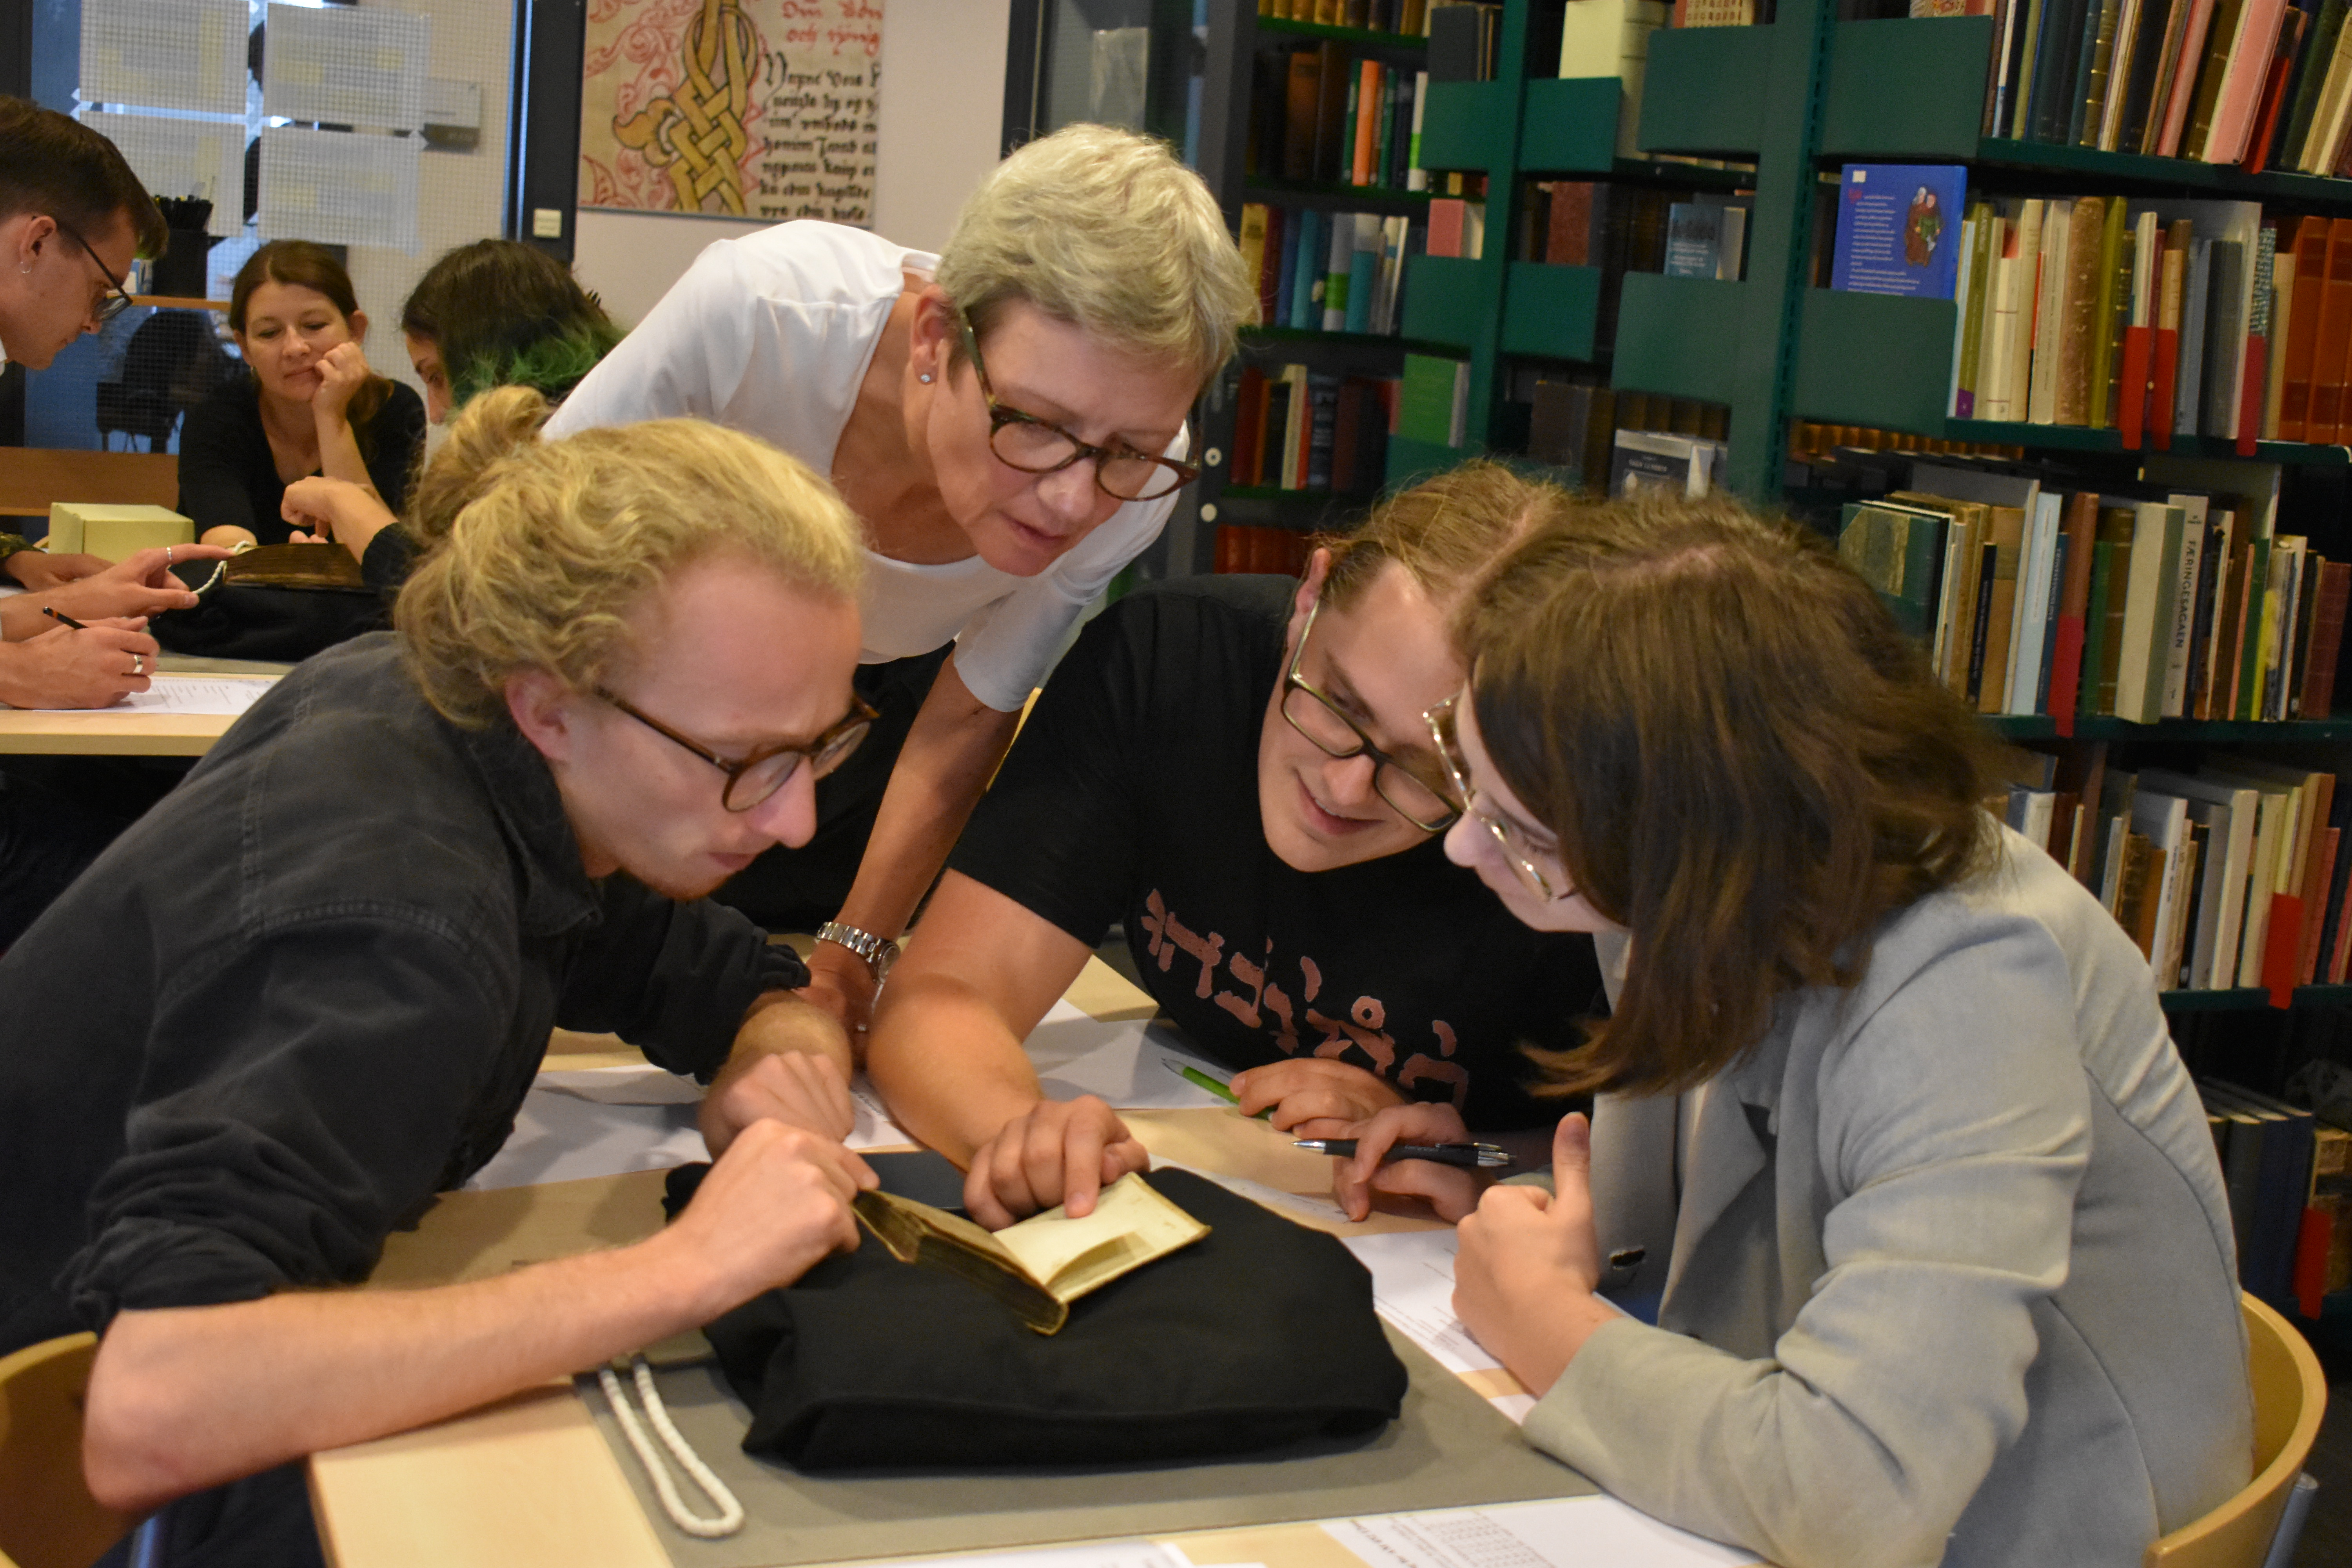 Students and a teacher study a manuscript